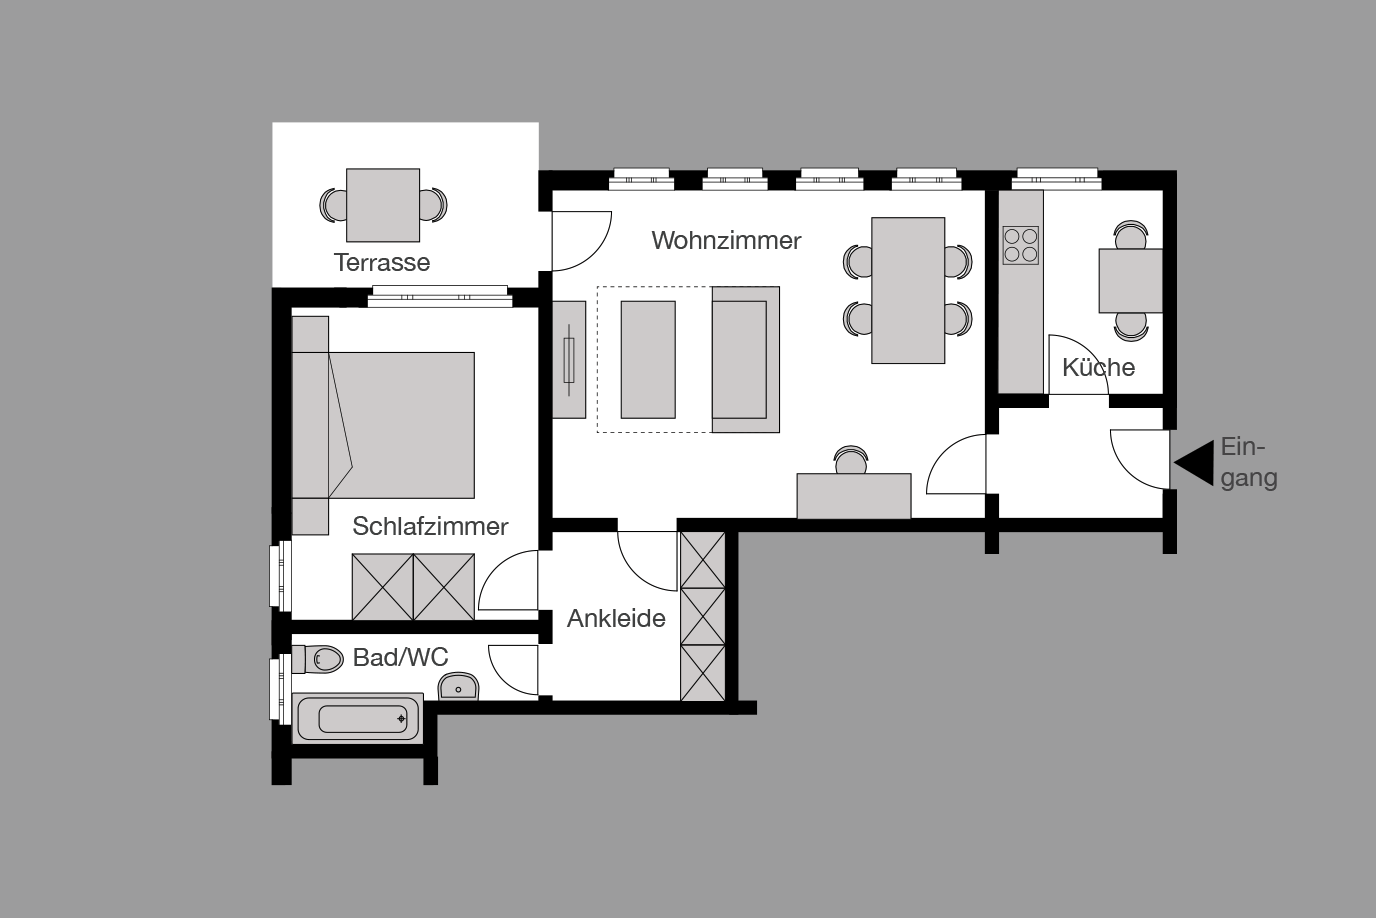 1bedroom apartment, ground floor, 70 sqm